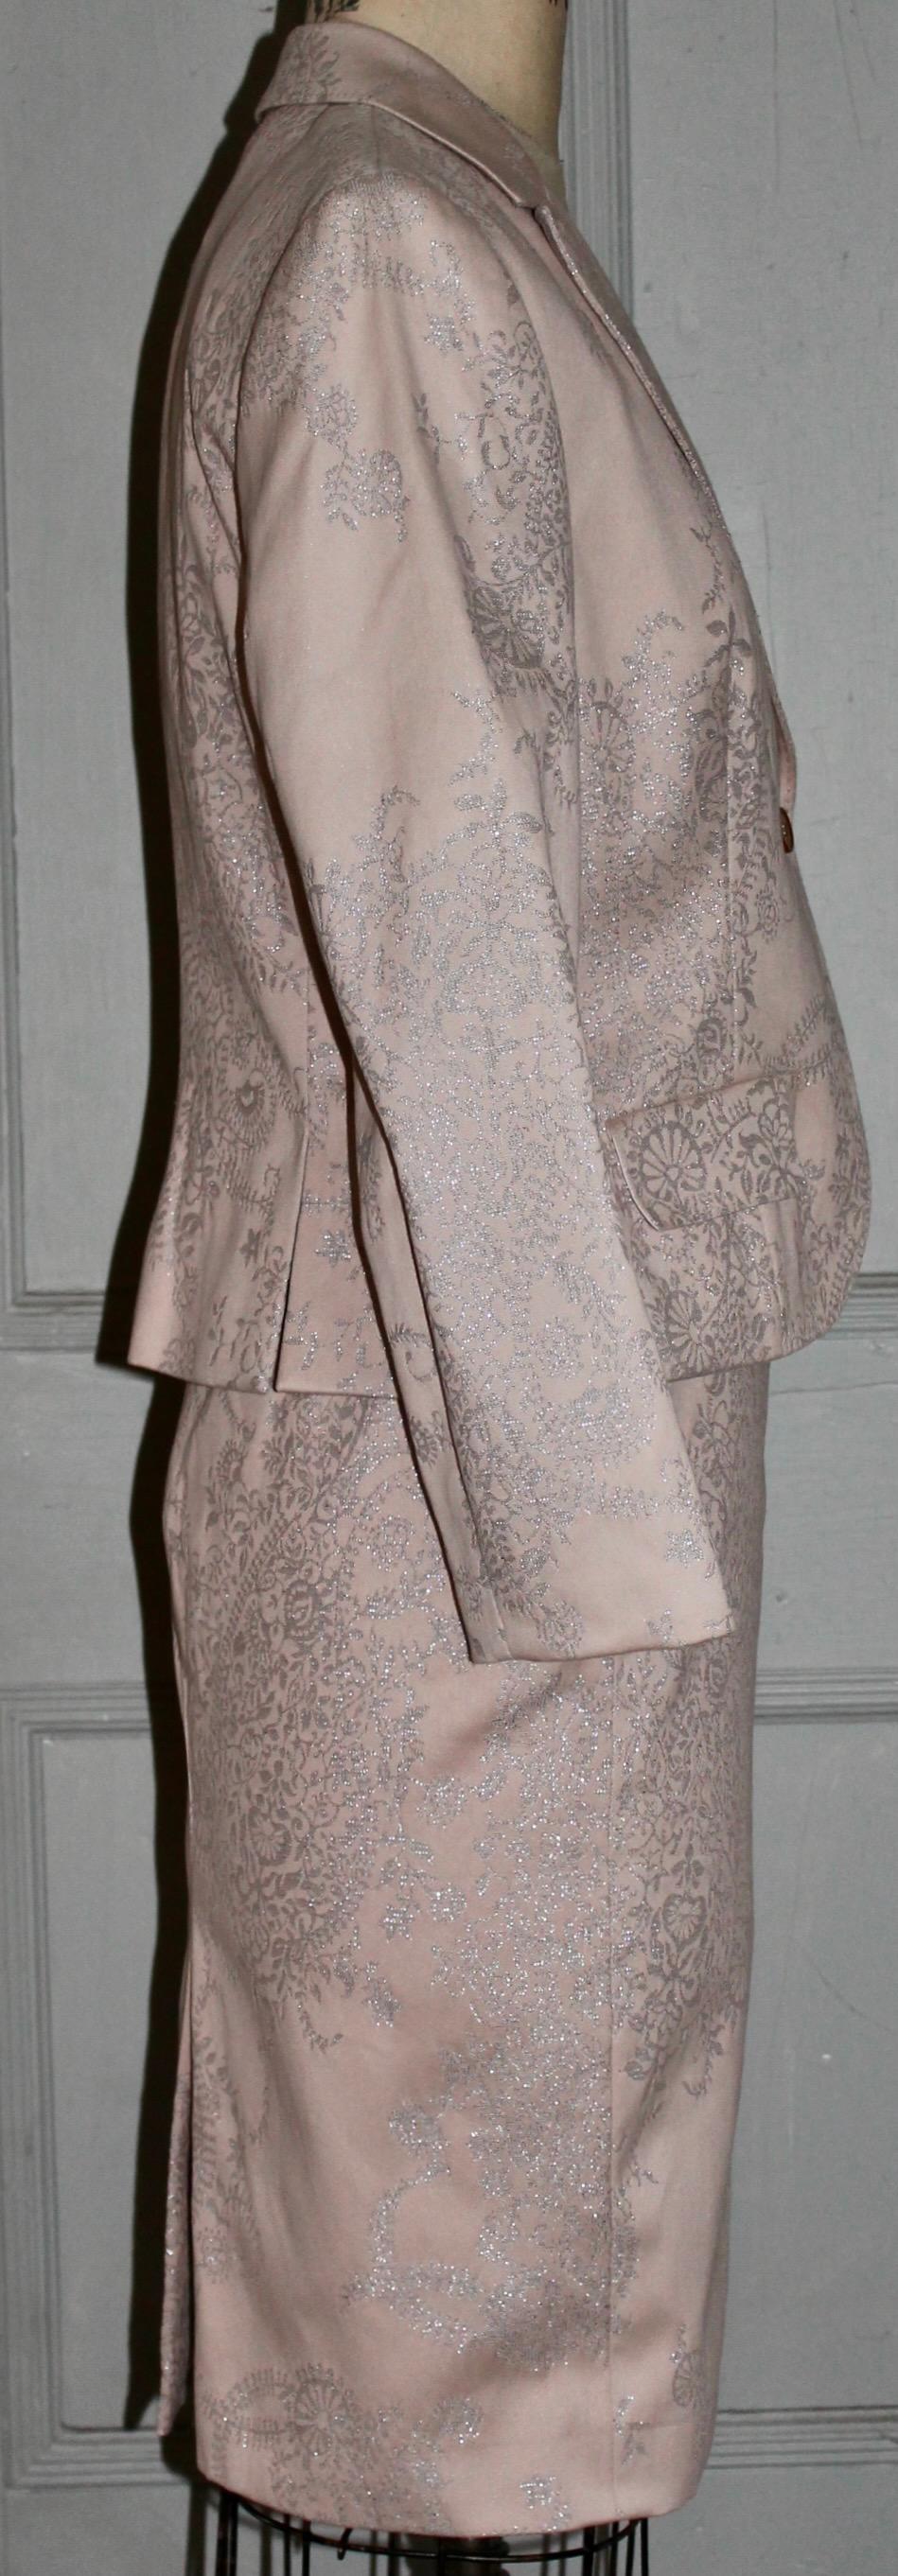 Women's Alexander McQueen circa 2000 Dusty Pale Rose Suit For Sale